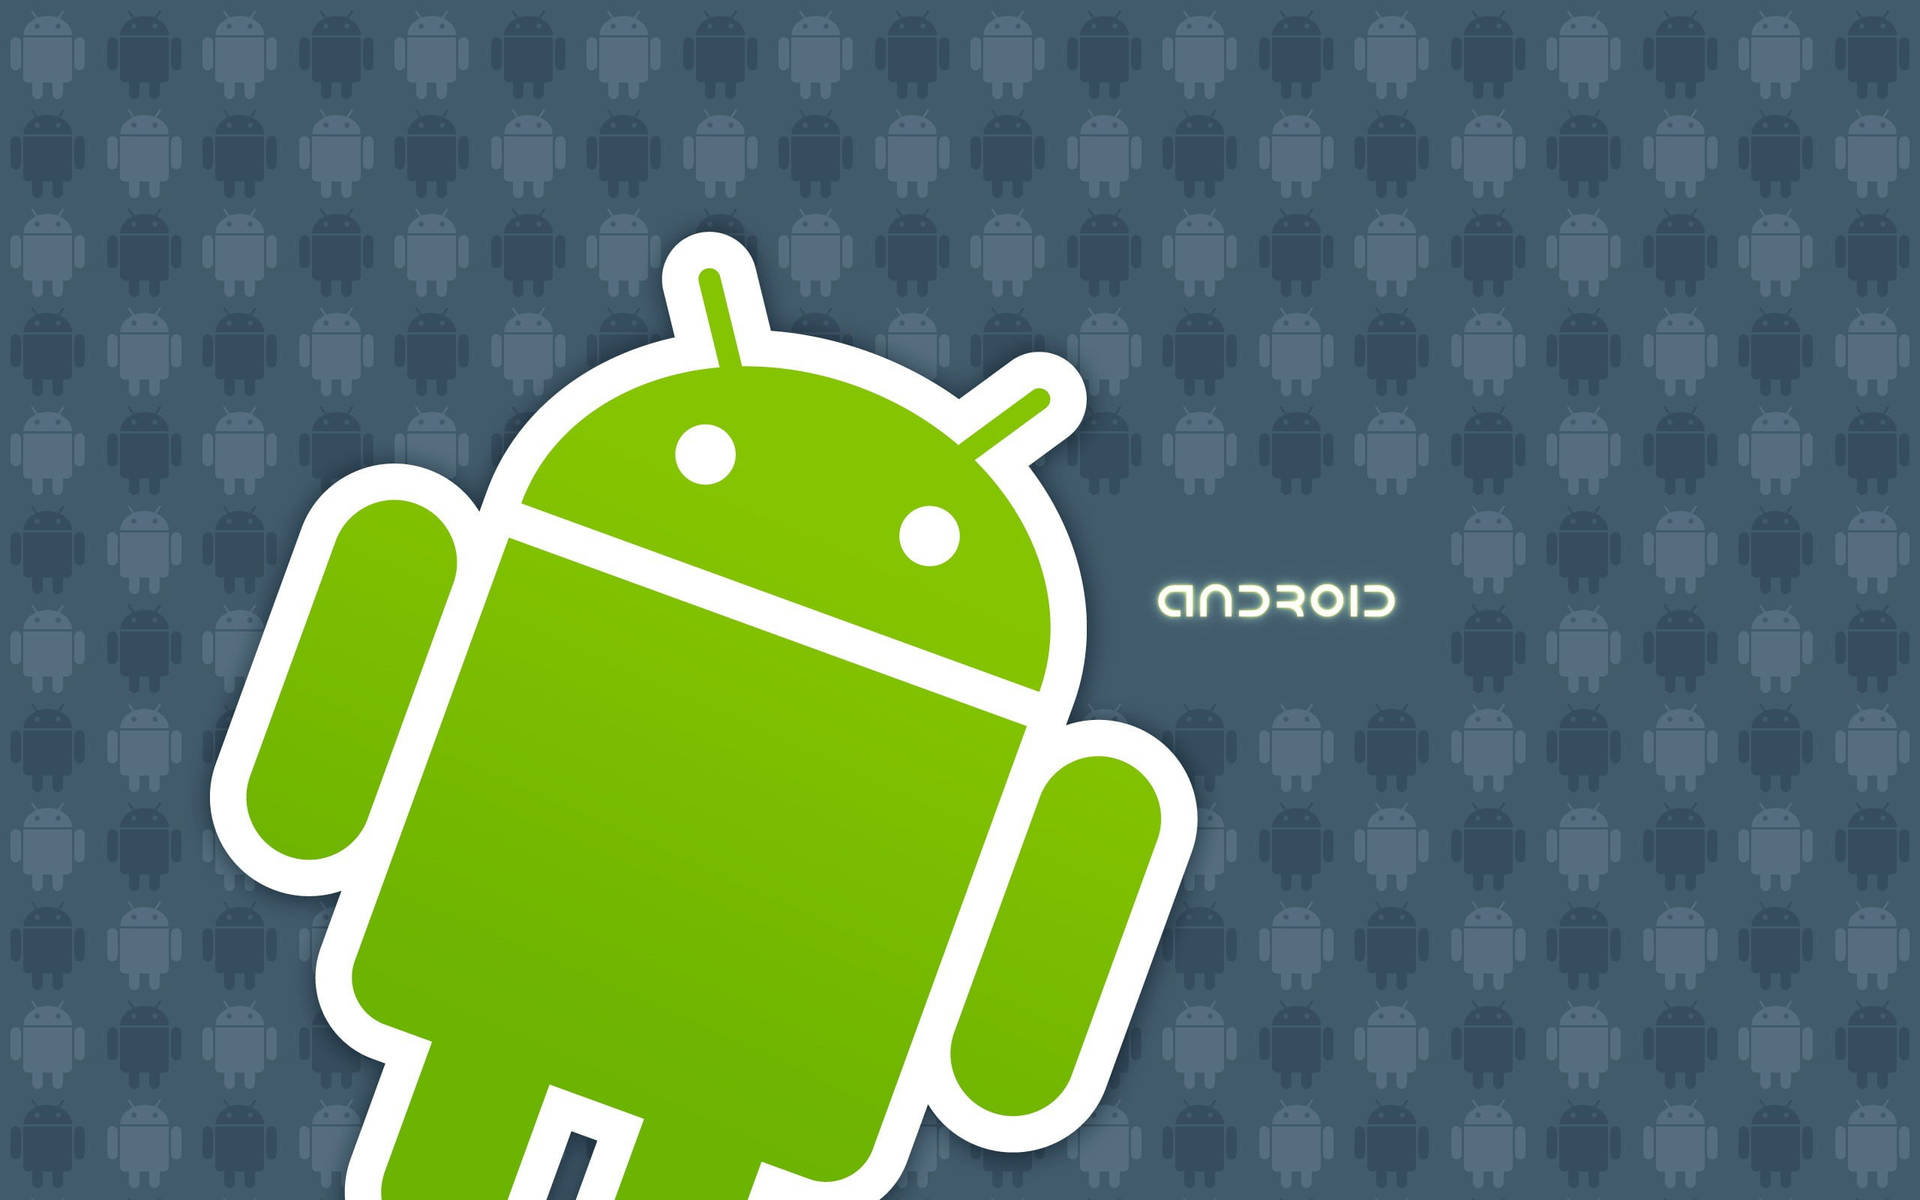 Google Android Sticker Desktop Background